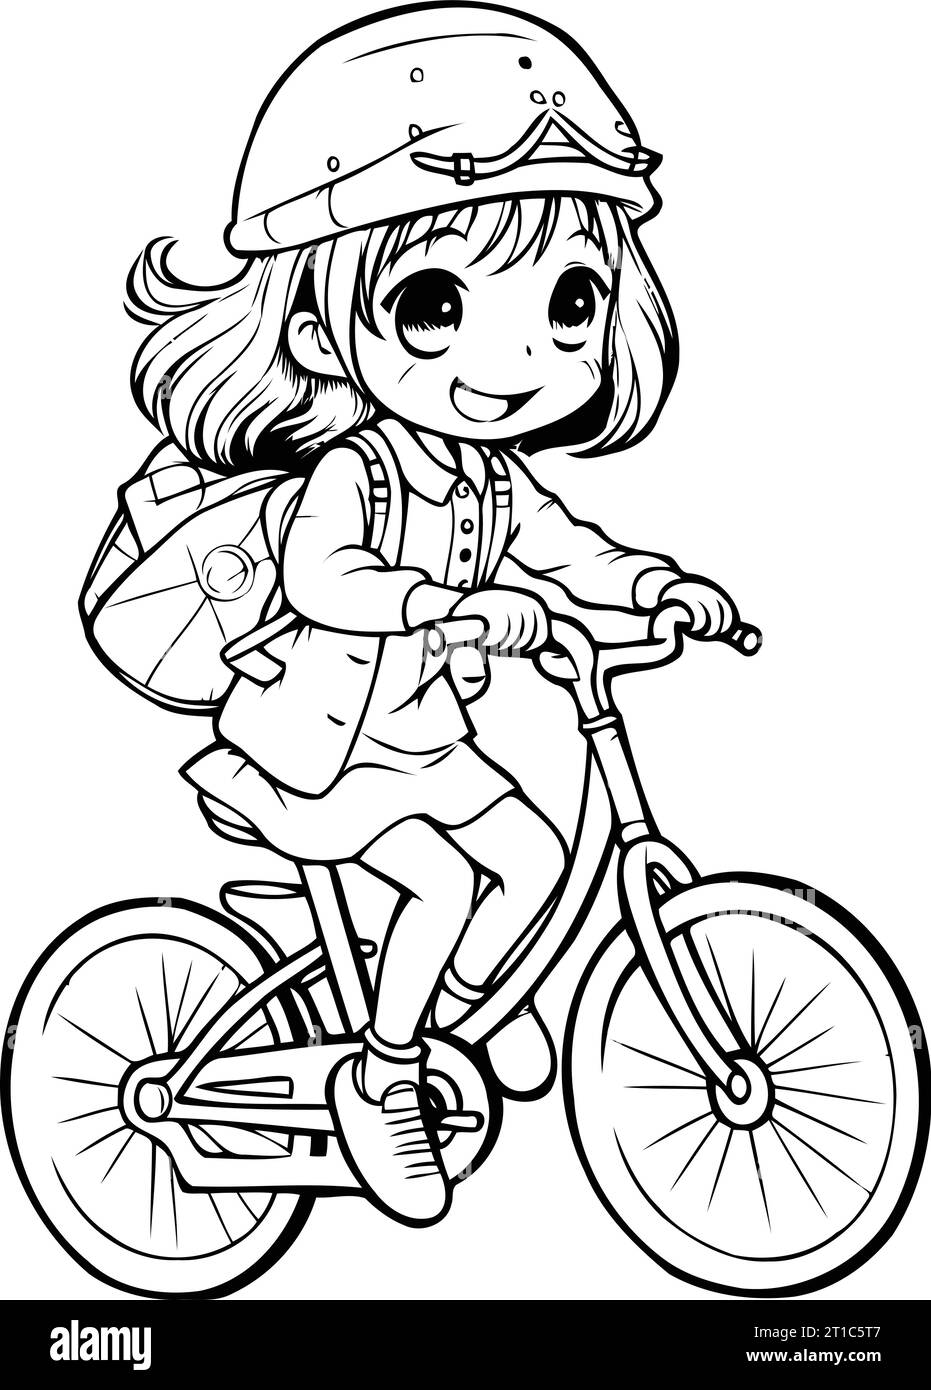 Süßes kleines Mädchen, das Fahrrad fährt. Vektorillustration für Malbuch. Stock Vektor